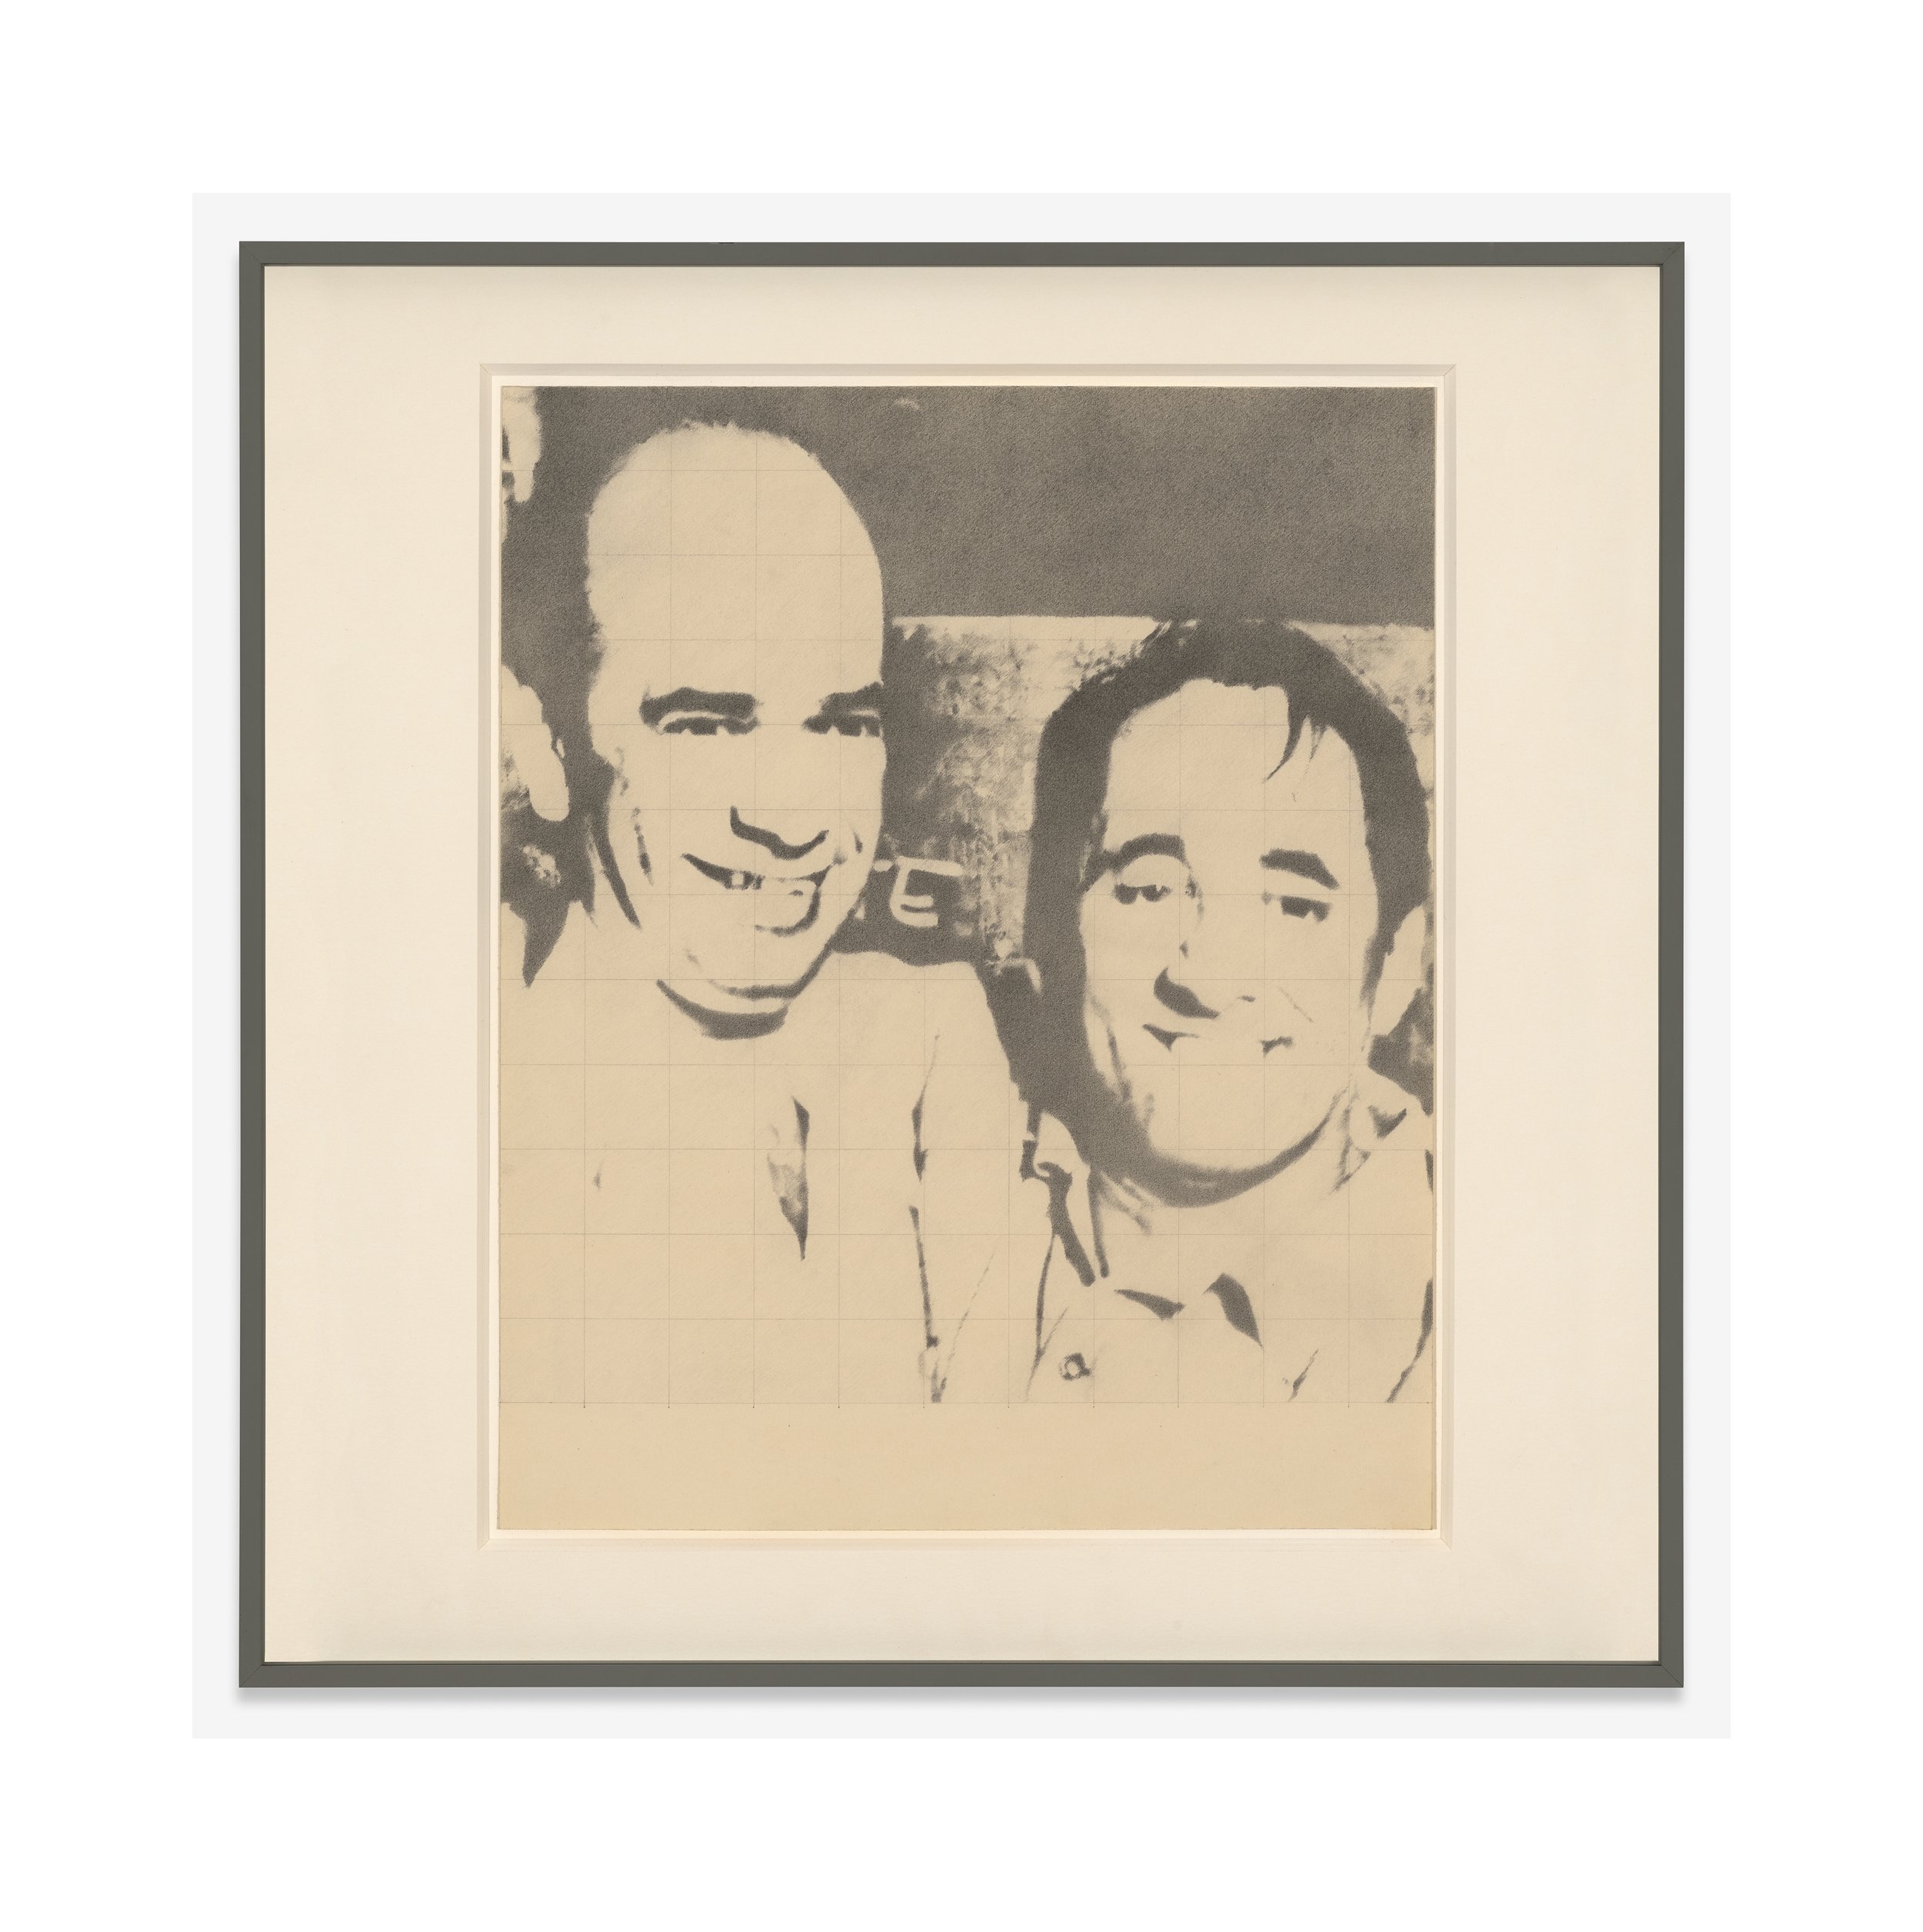   Morales and Duarte, San Salvador, 1980   17 x 17 (framed), graphite on paper, 1981 